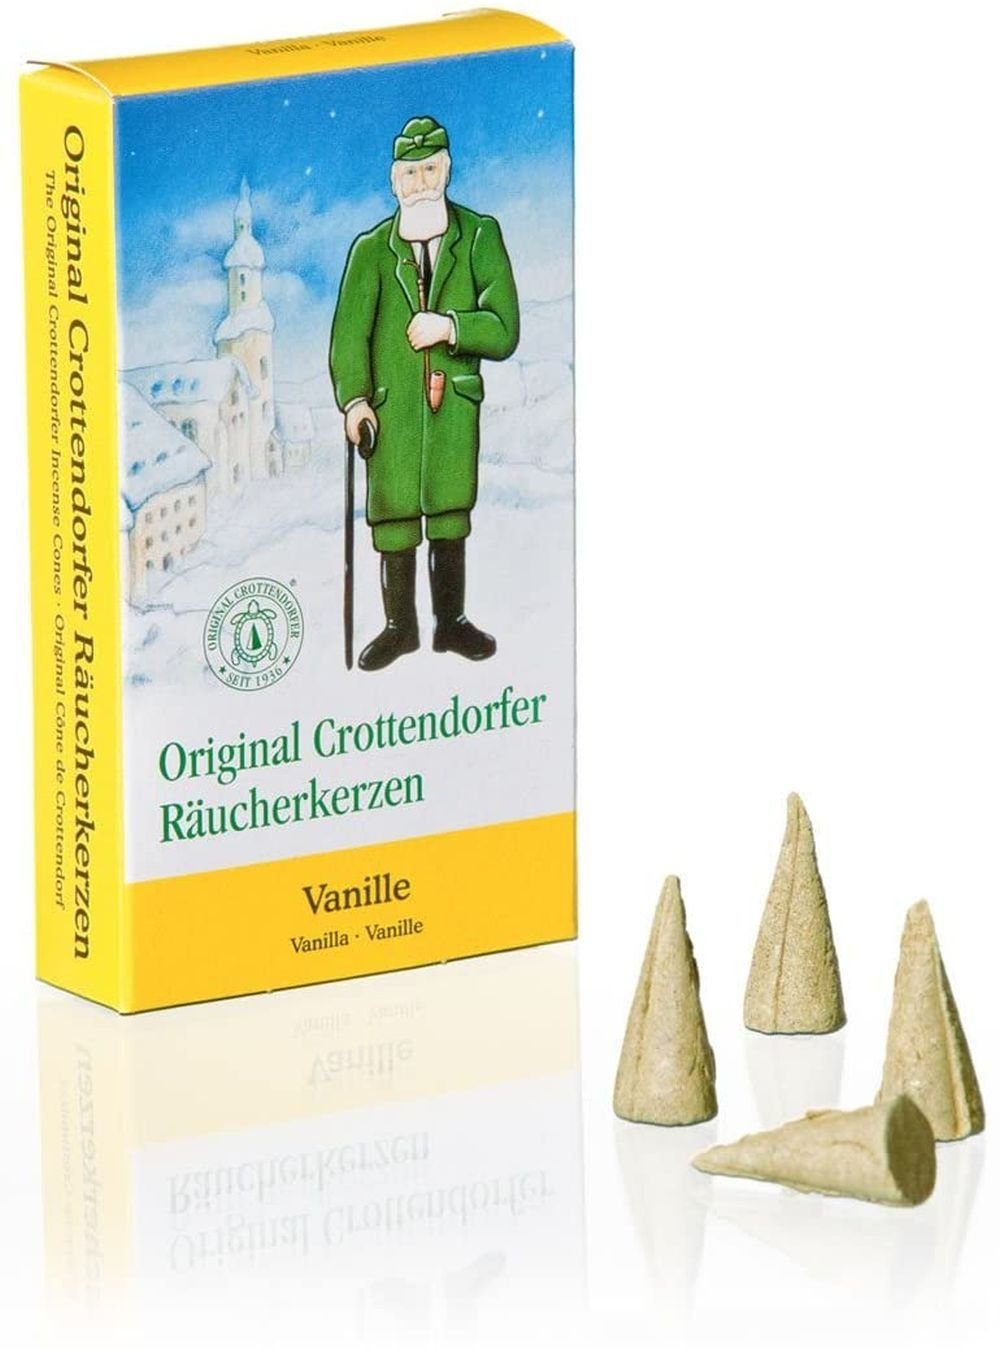 1 Räucherkerzen- Vanille 24er Crottendorfer Packung Räuchermännchen - Päckchen